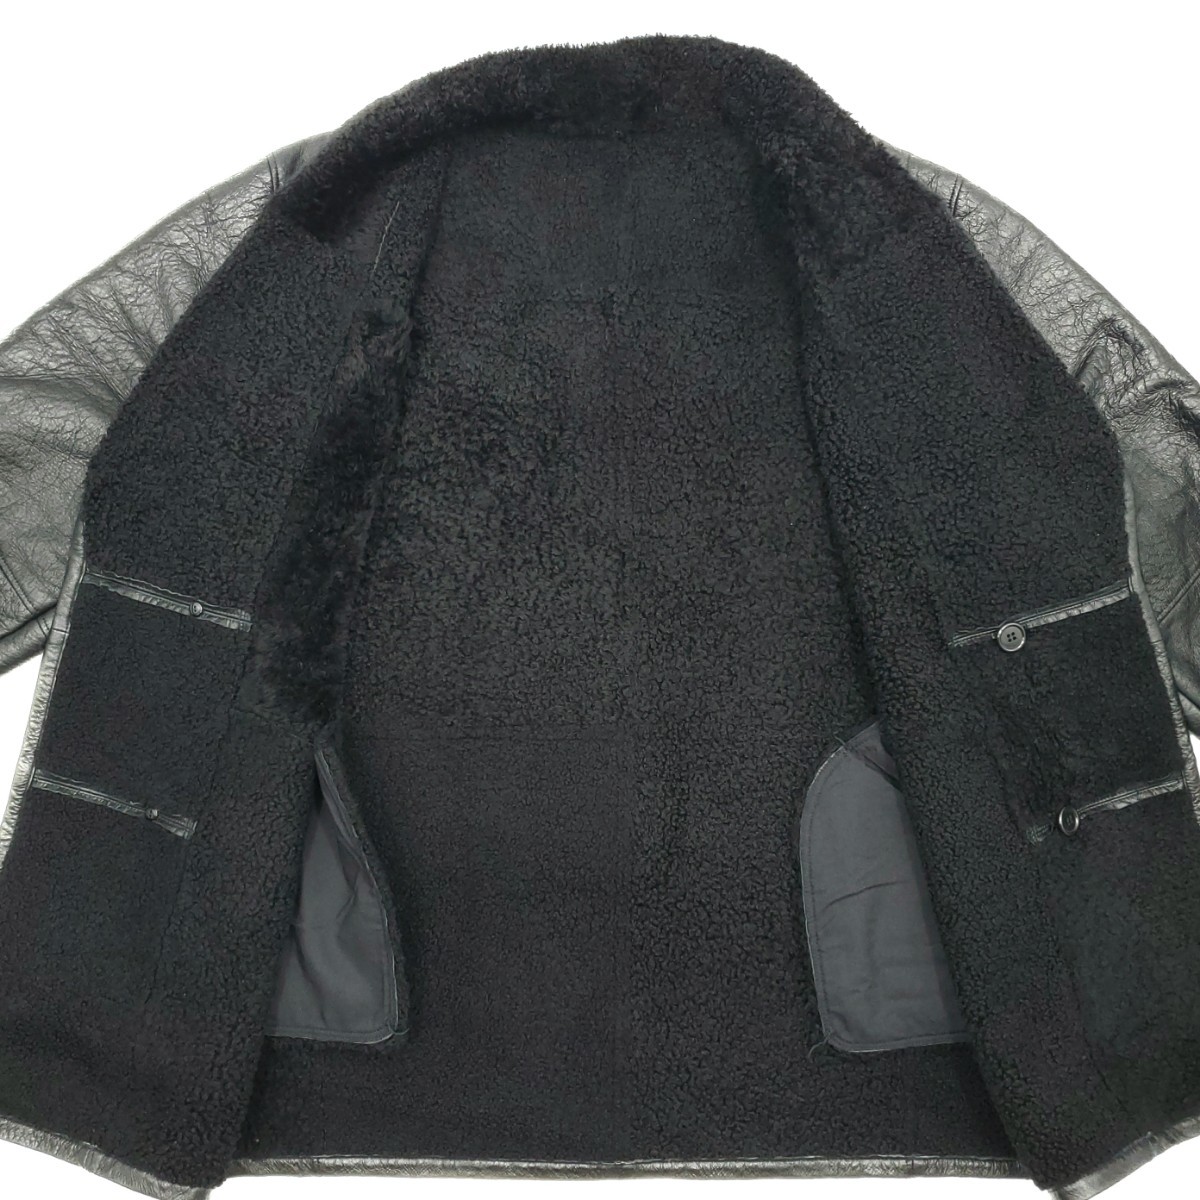  top class nichiro fur *Wind Armor*LL real mouton coat black black men's XL original leather window armor -nichiwa real leather fur sheep leather boa jacket SZJ72